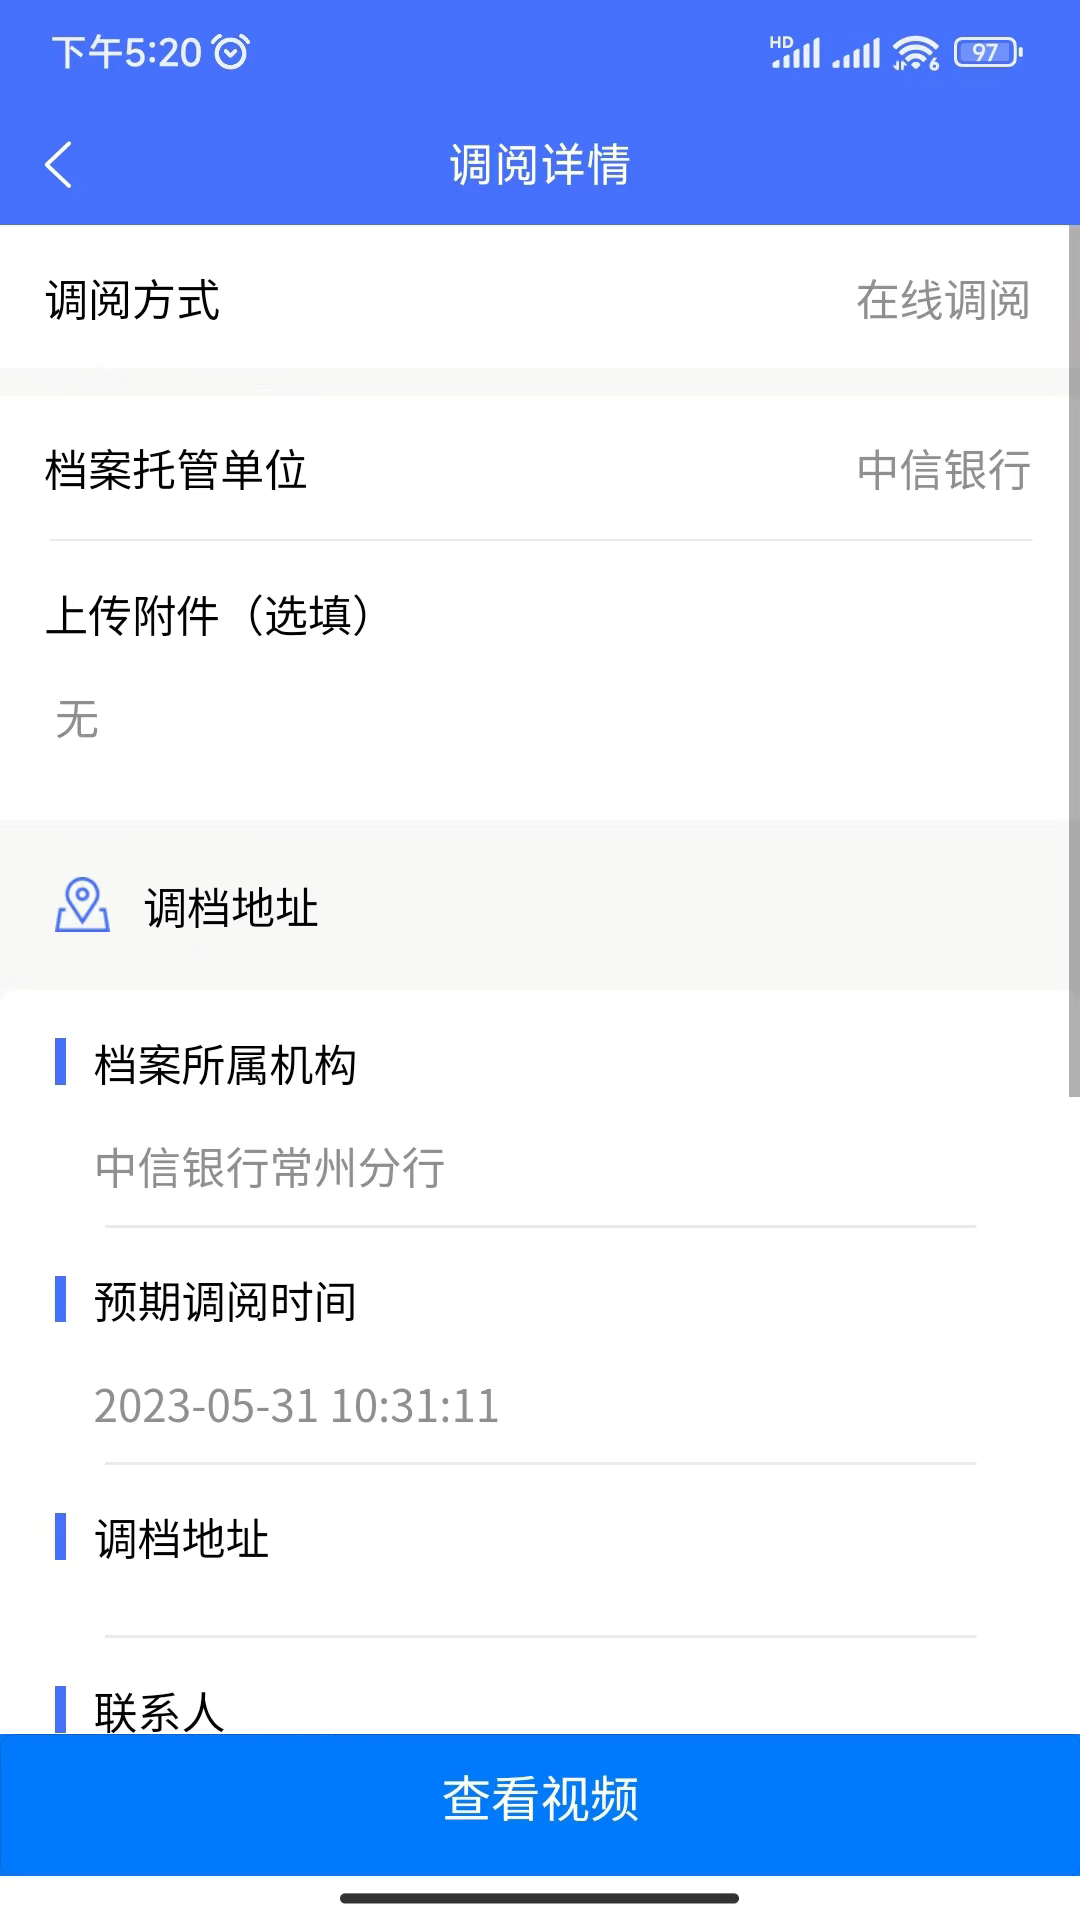 鸥迅档案管理app官方版图1: